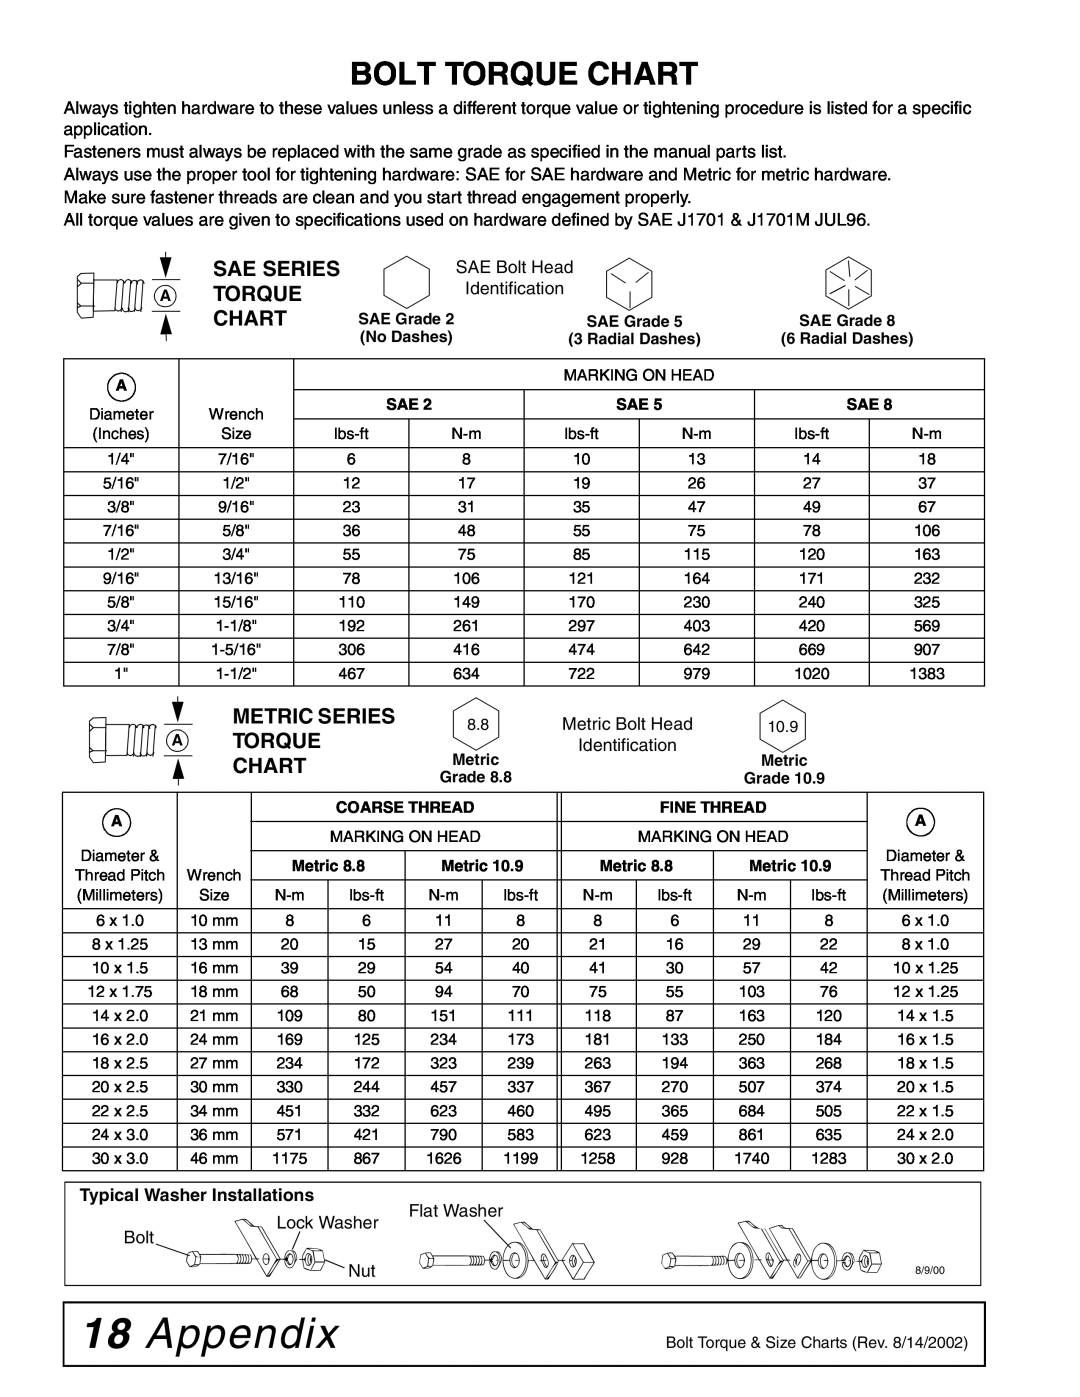 Woods Equipment FSW6000T, FSW6000F manual Appendix, Bolt Torque Chart, Sae Series A Torque Chart, Metric Series 